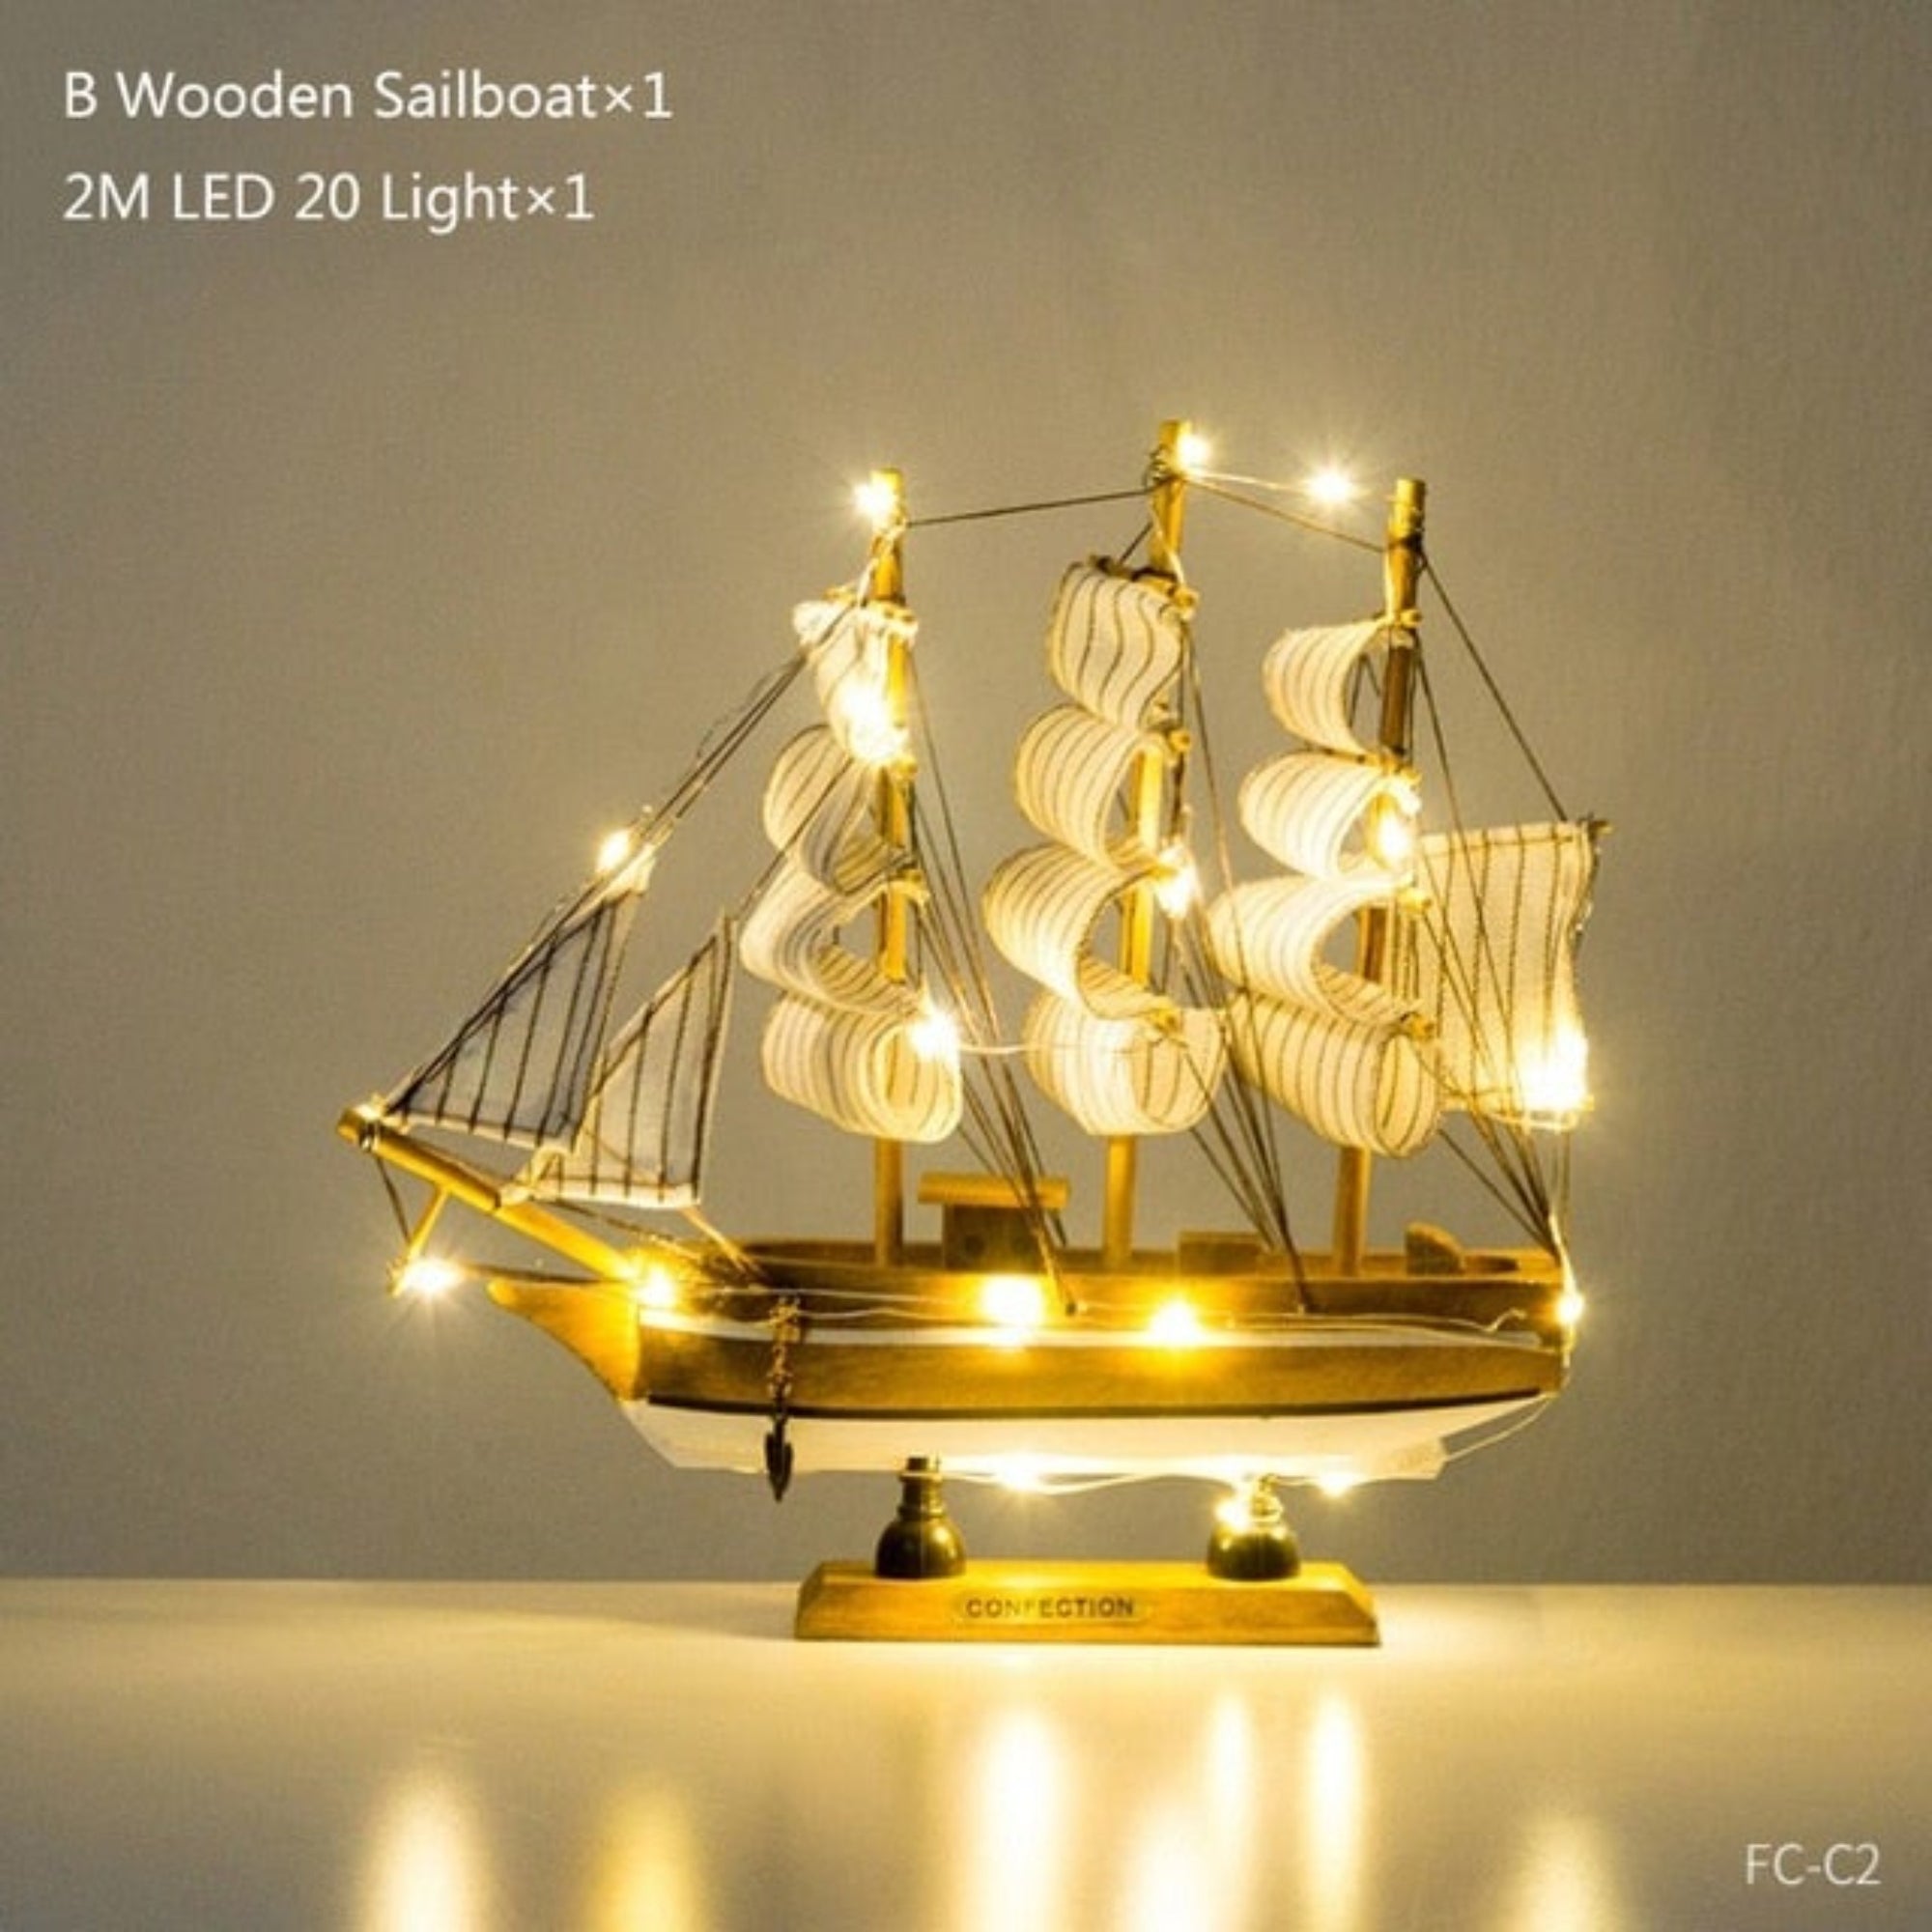 LED Wooden Sailboat